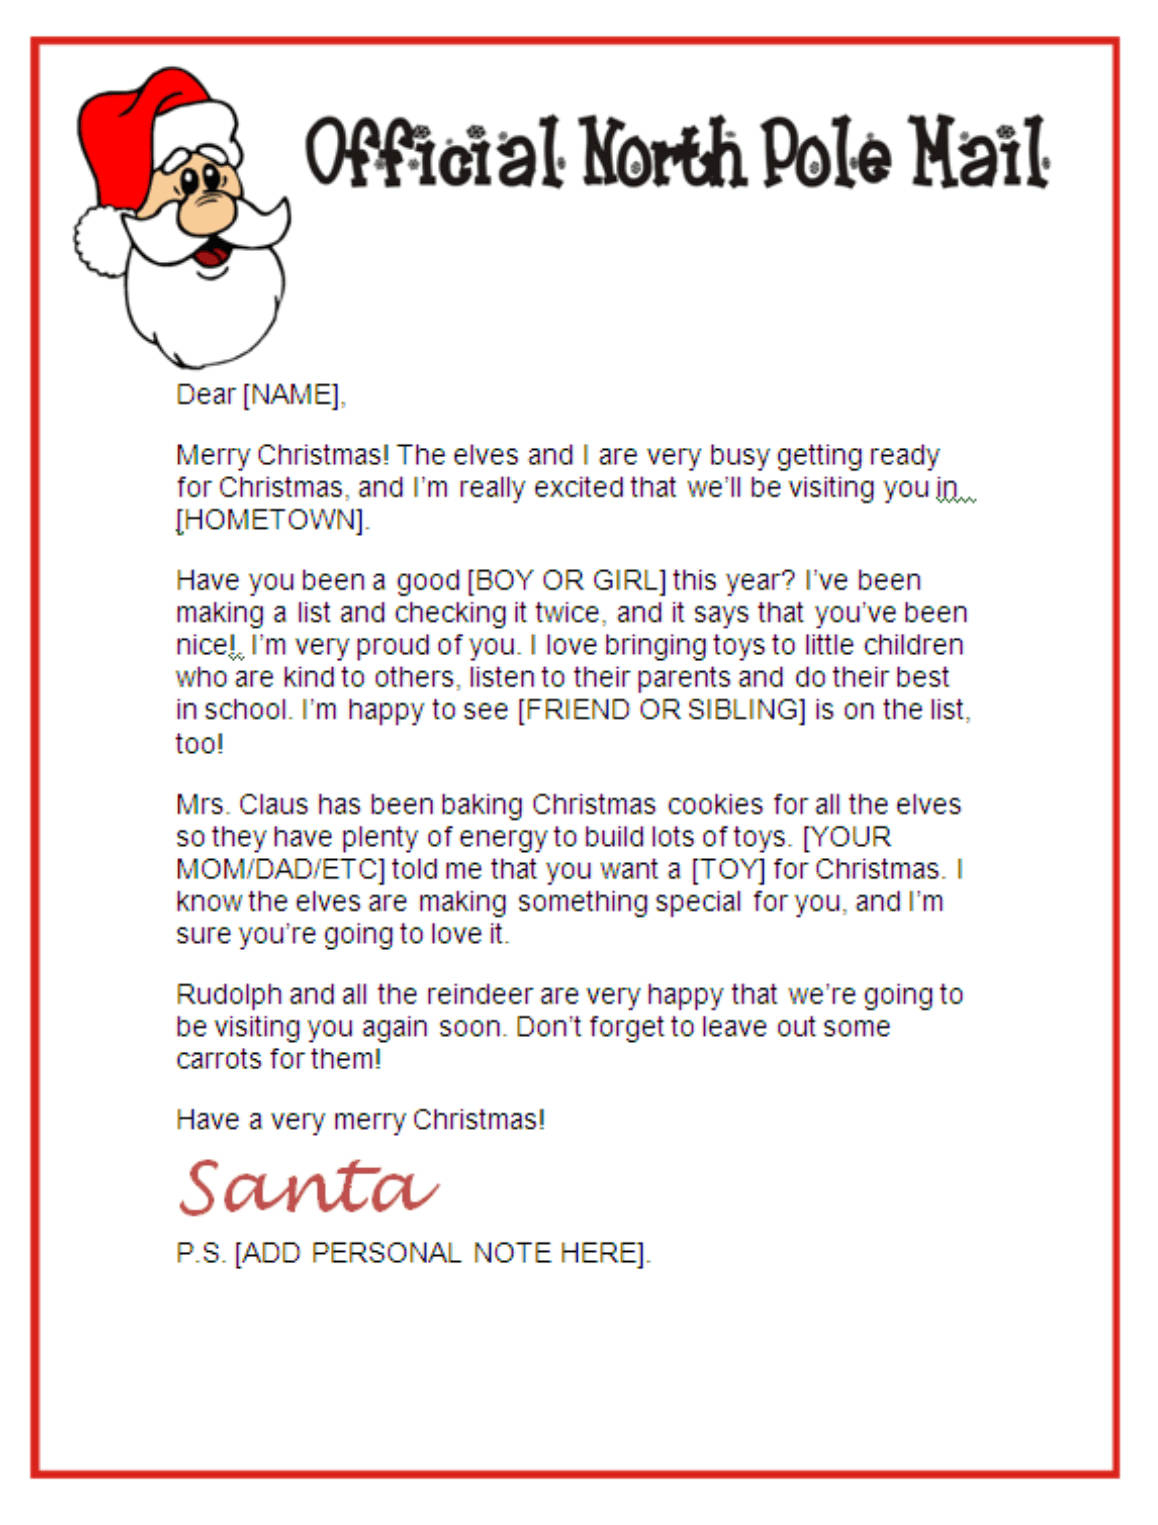 Santa Response Letter Template - Business Christmas Letter Template Business Cards Ideas